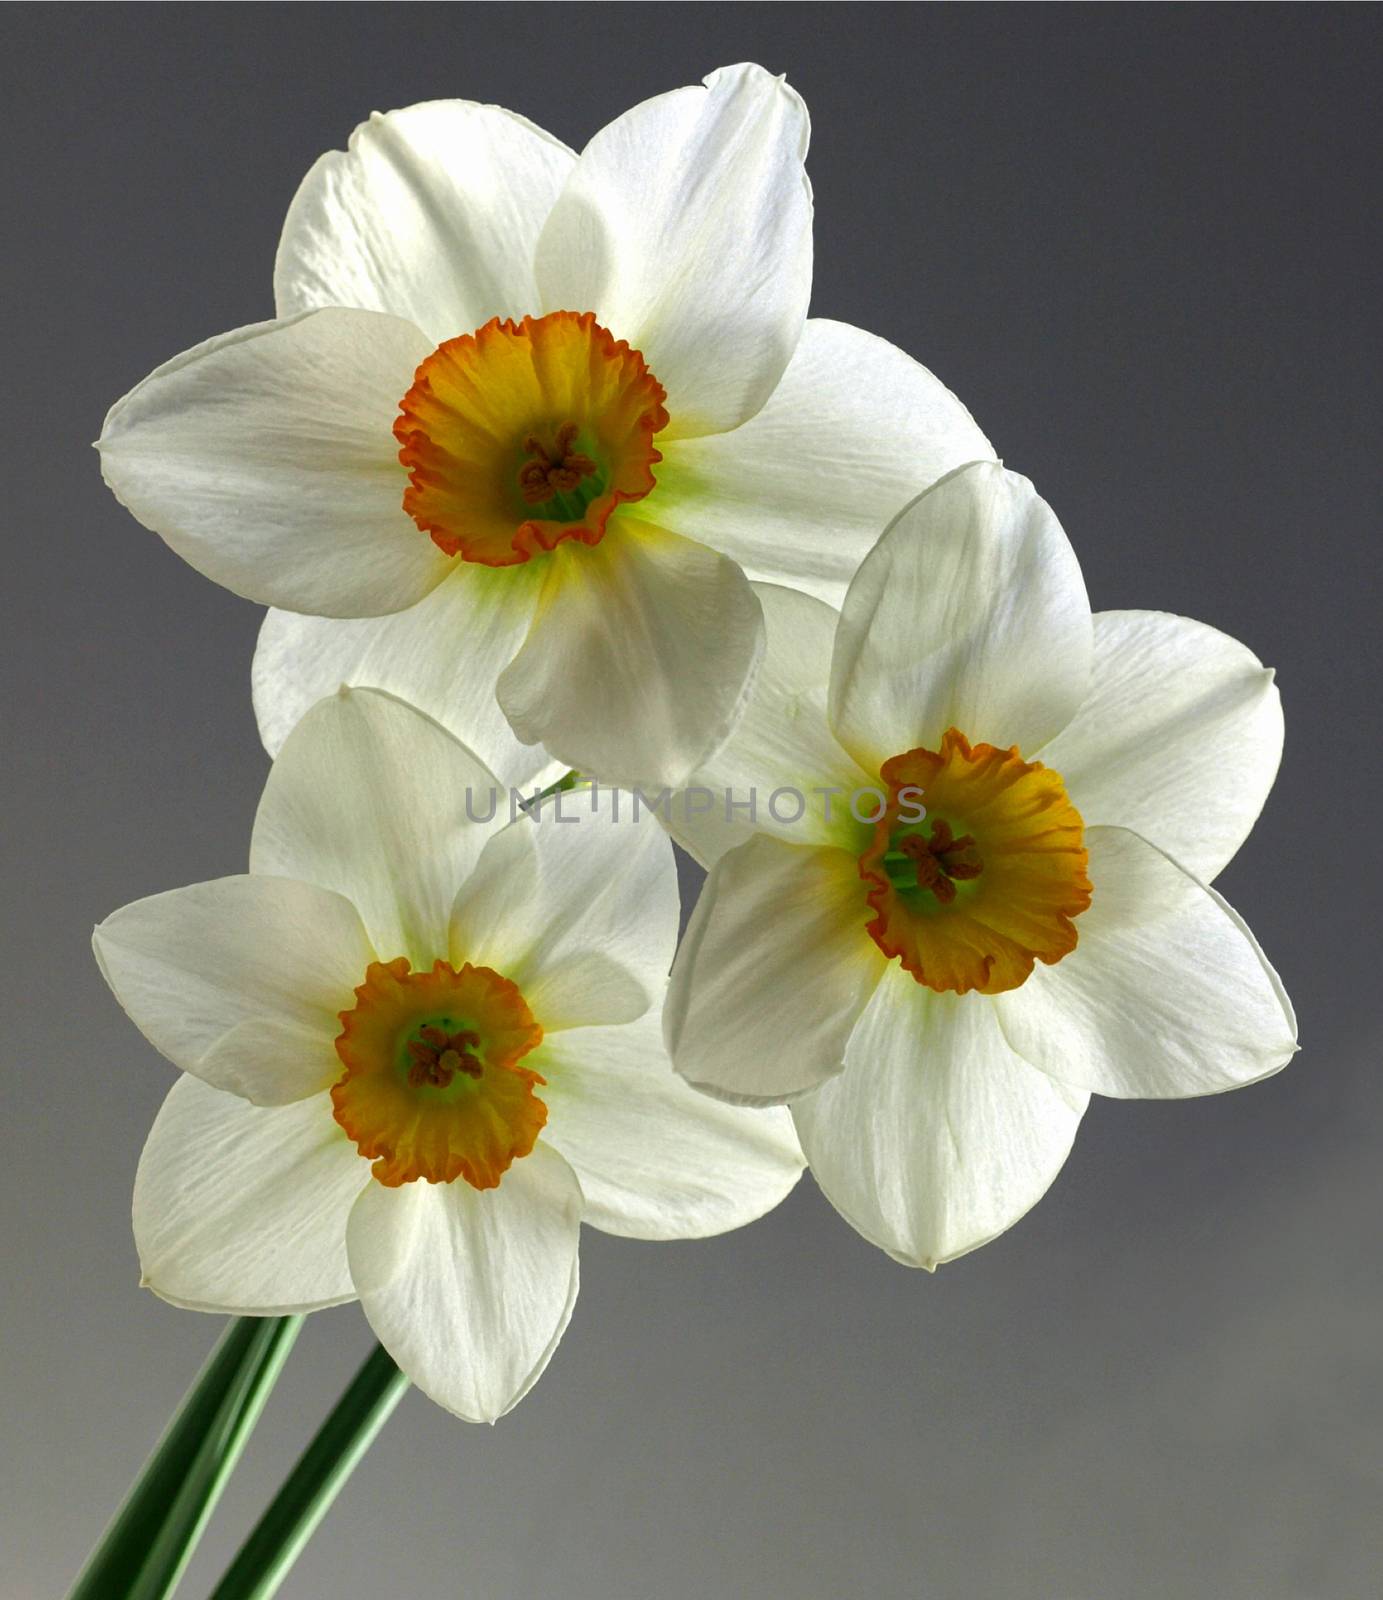 narcissus lent lily by Venakr